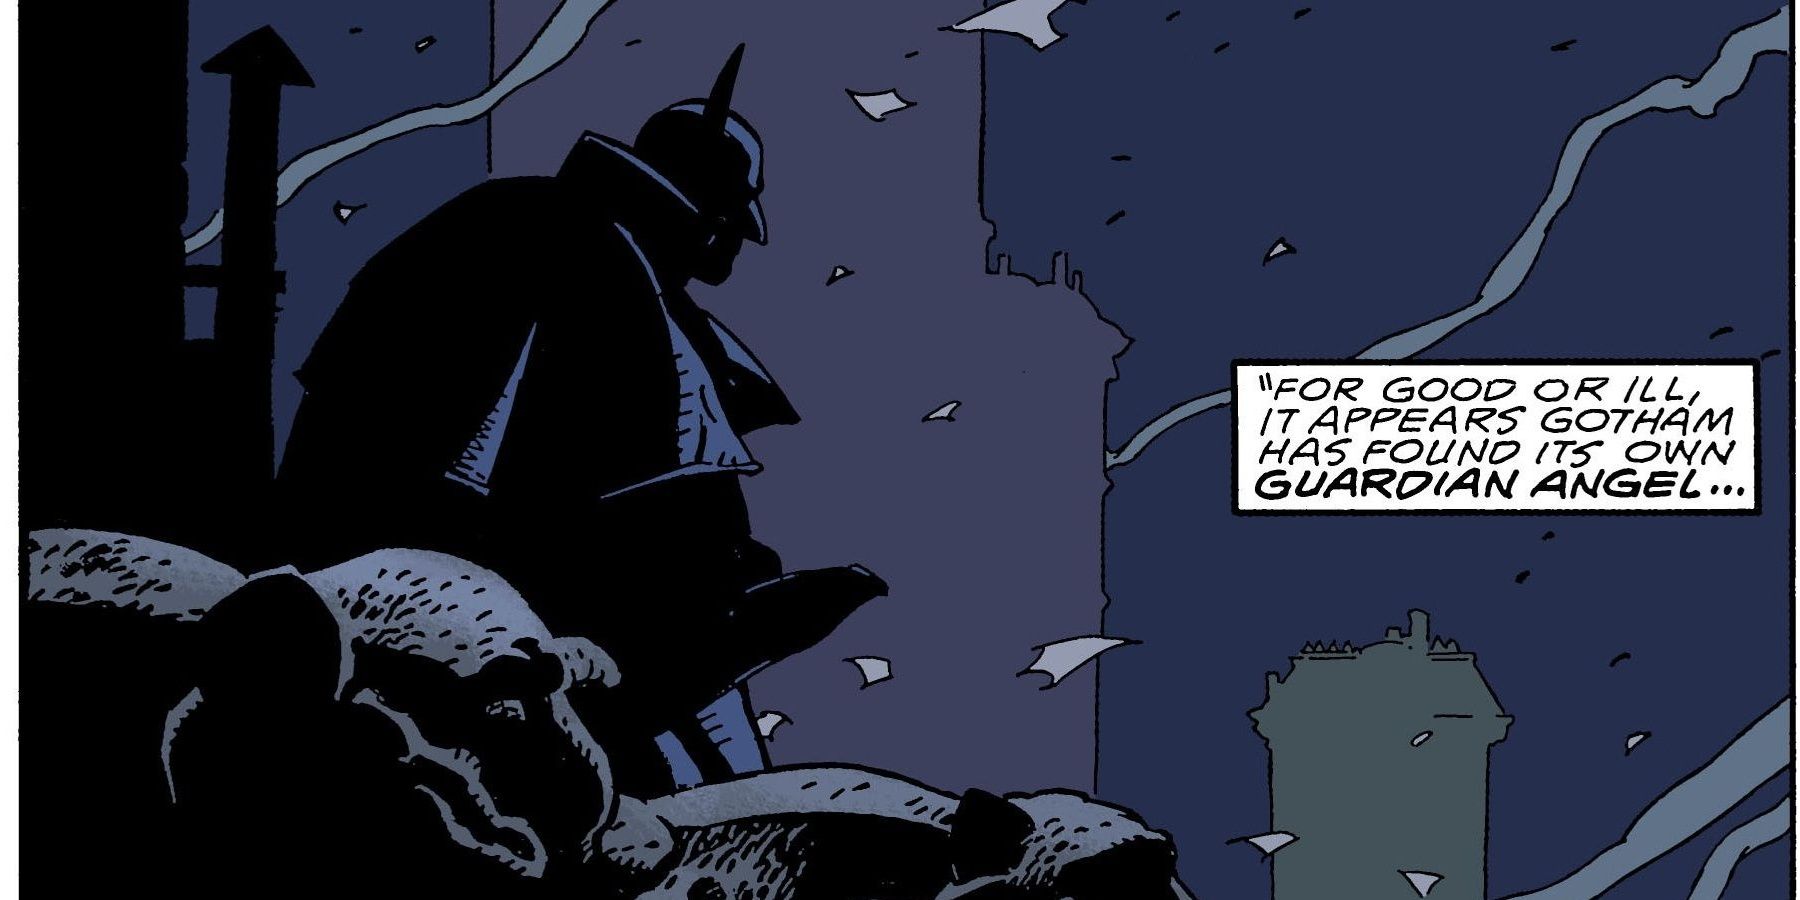 The Batman of DC Comics' Gothm By Gaslight enshrouded in shadow